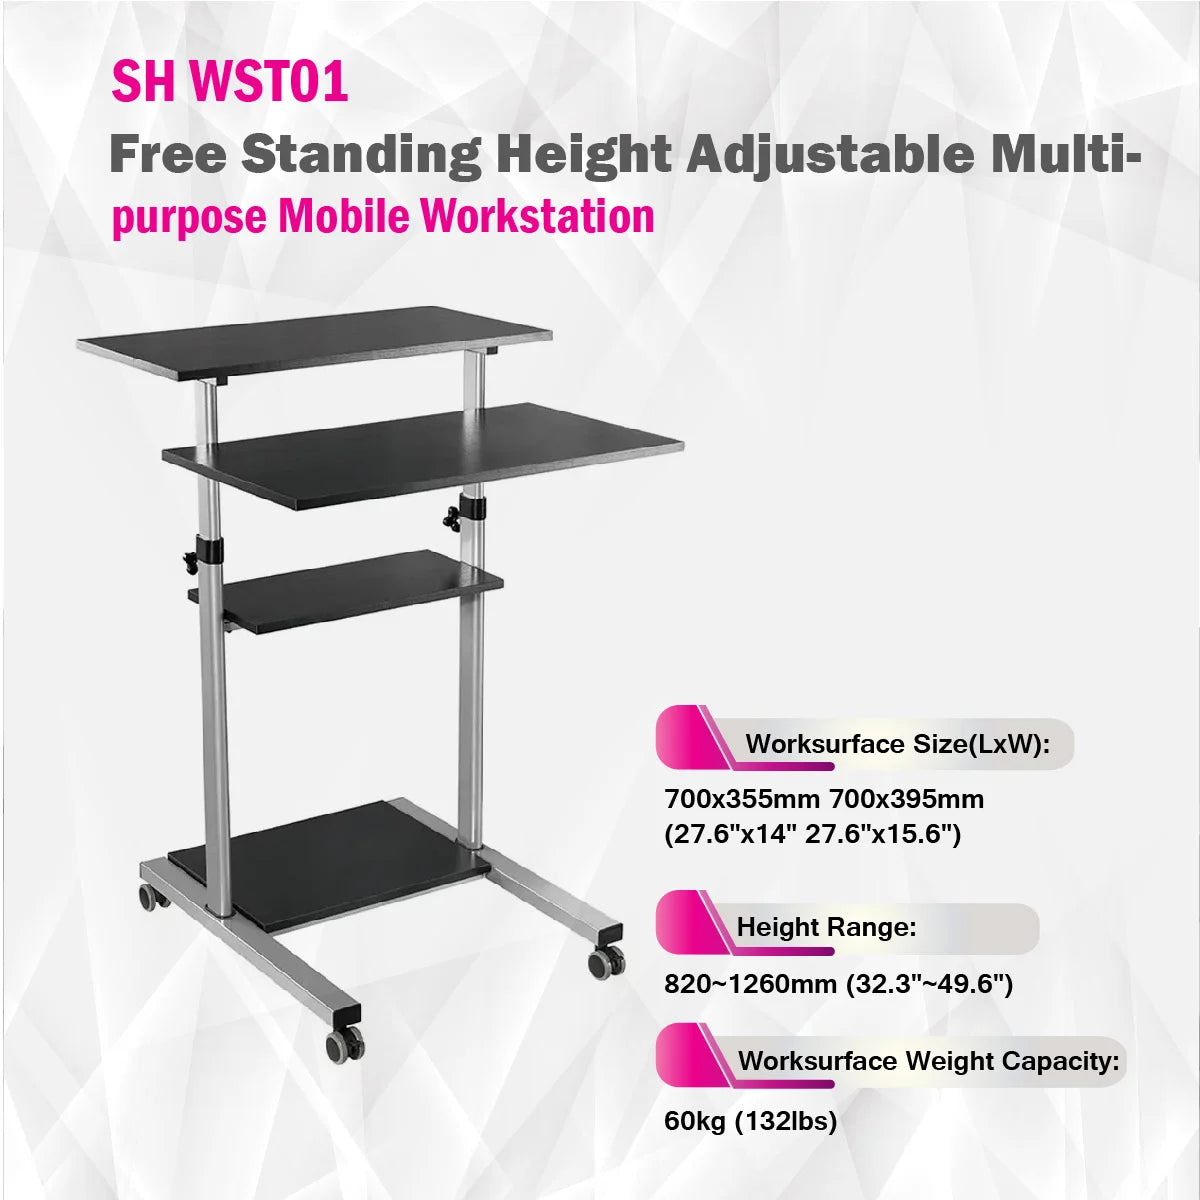 Skilltech  -SH WST01 - Free Standing Height Adjustable Multi-Purpose Mobile Workstation Ergonomic Mount